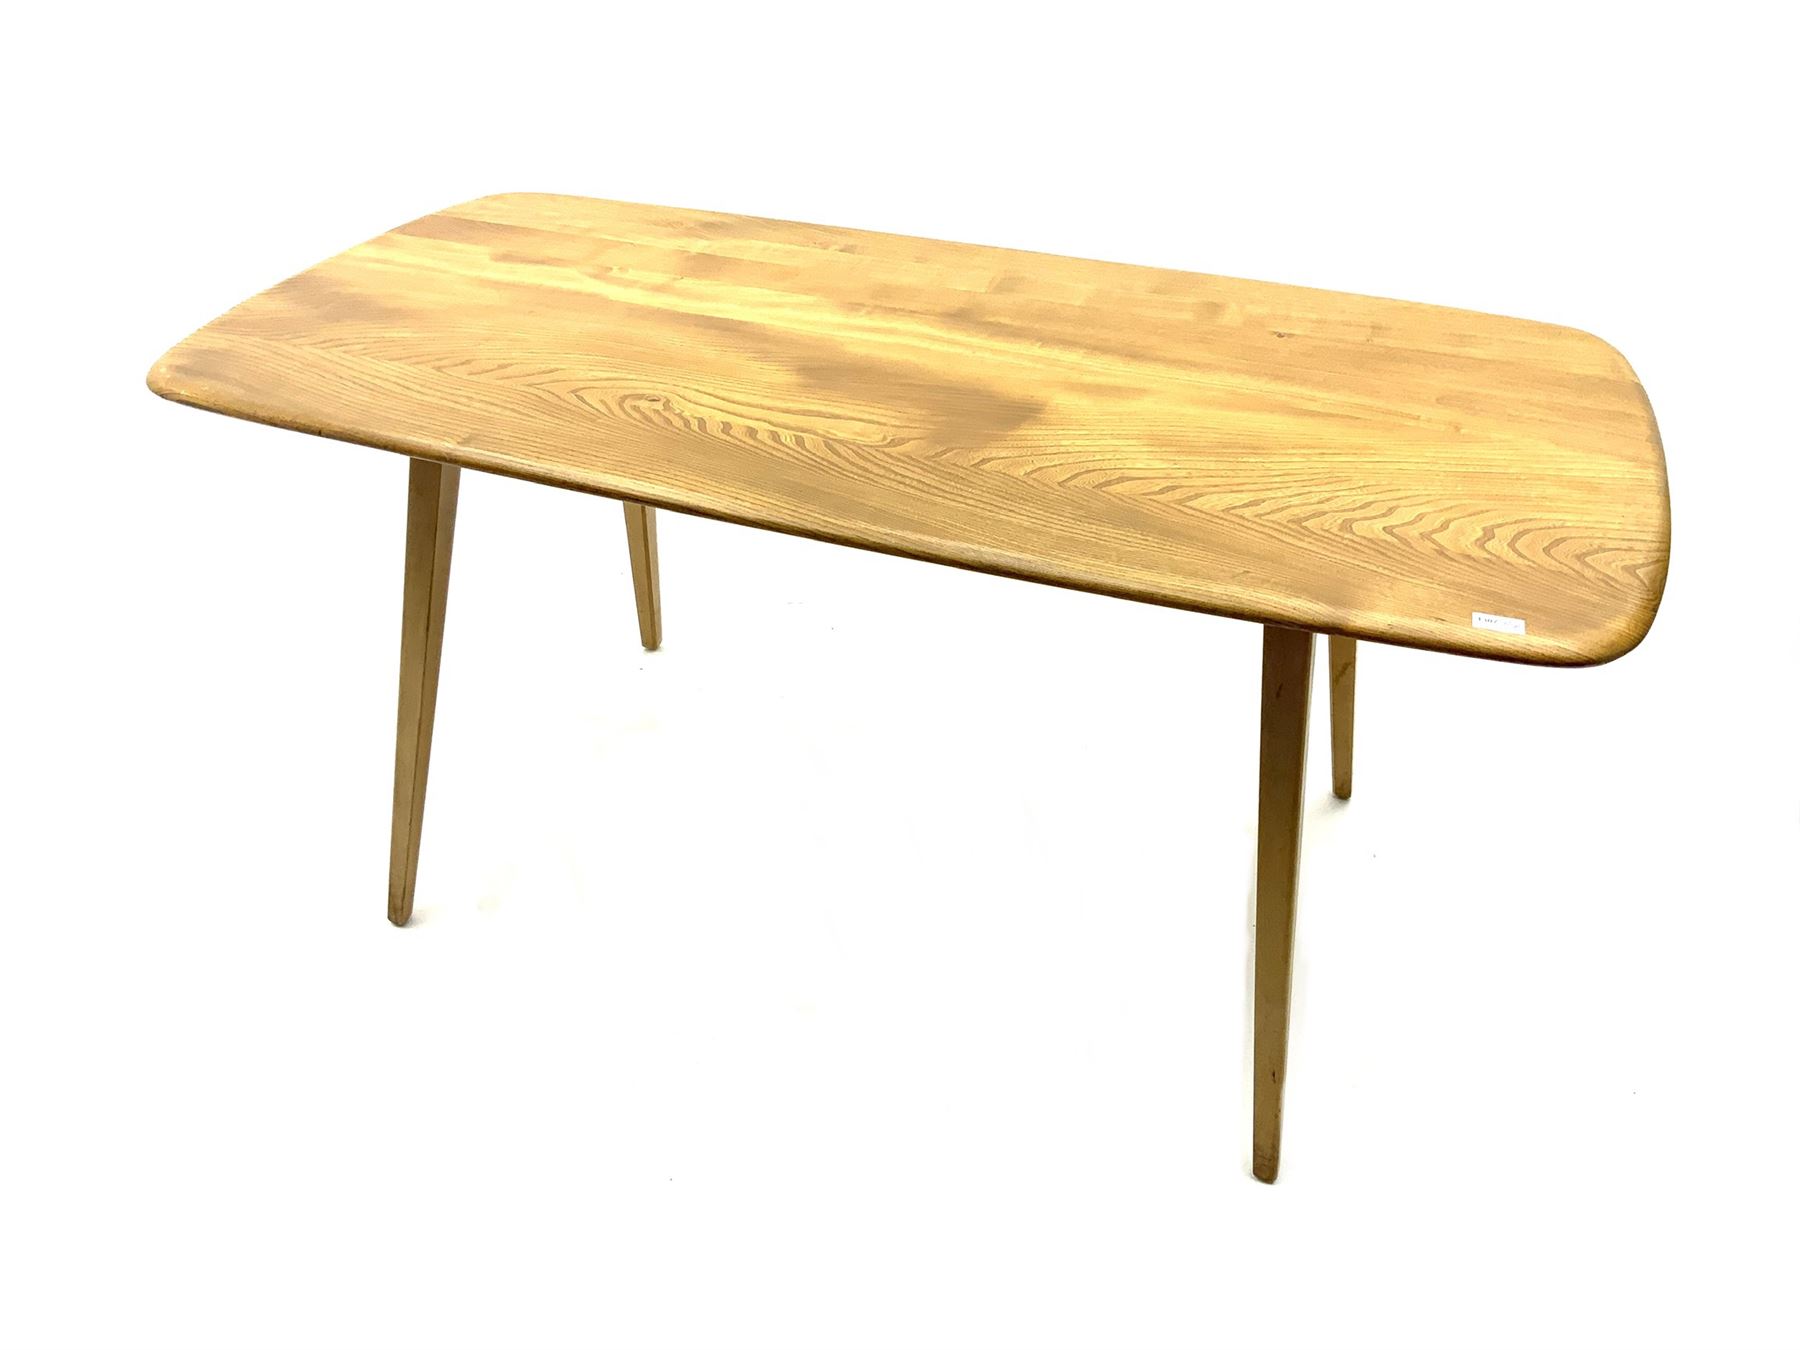 Ercol blonde elm rectangular dining table